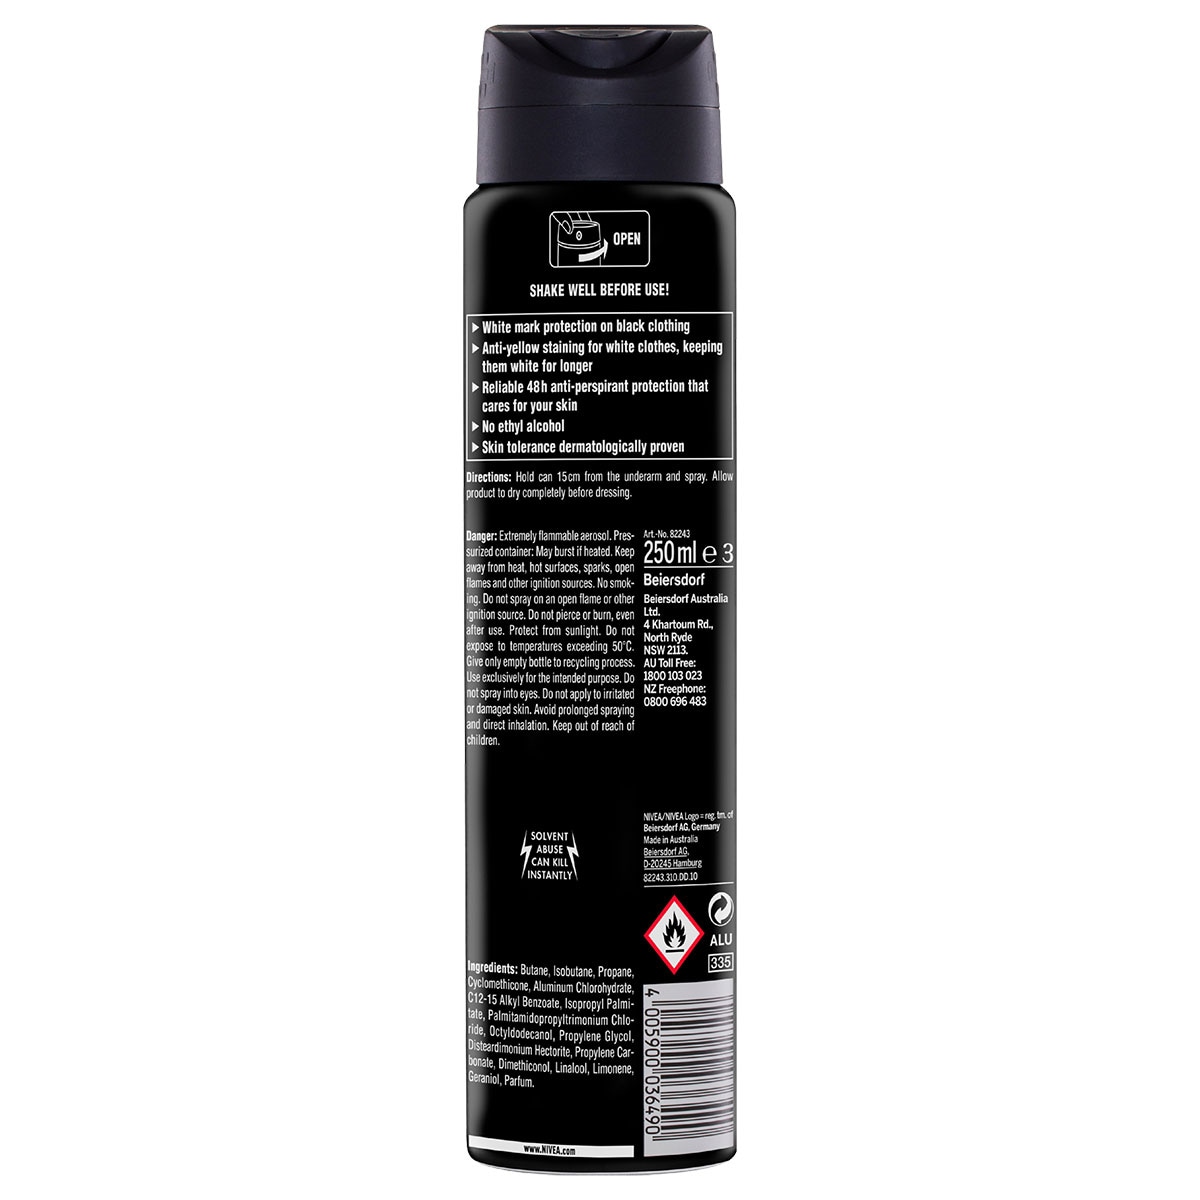 Nivea for Men Invisible Black & White Anti-Perspirant Deodarant Spray Original 250ml